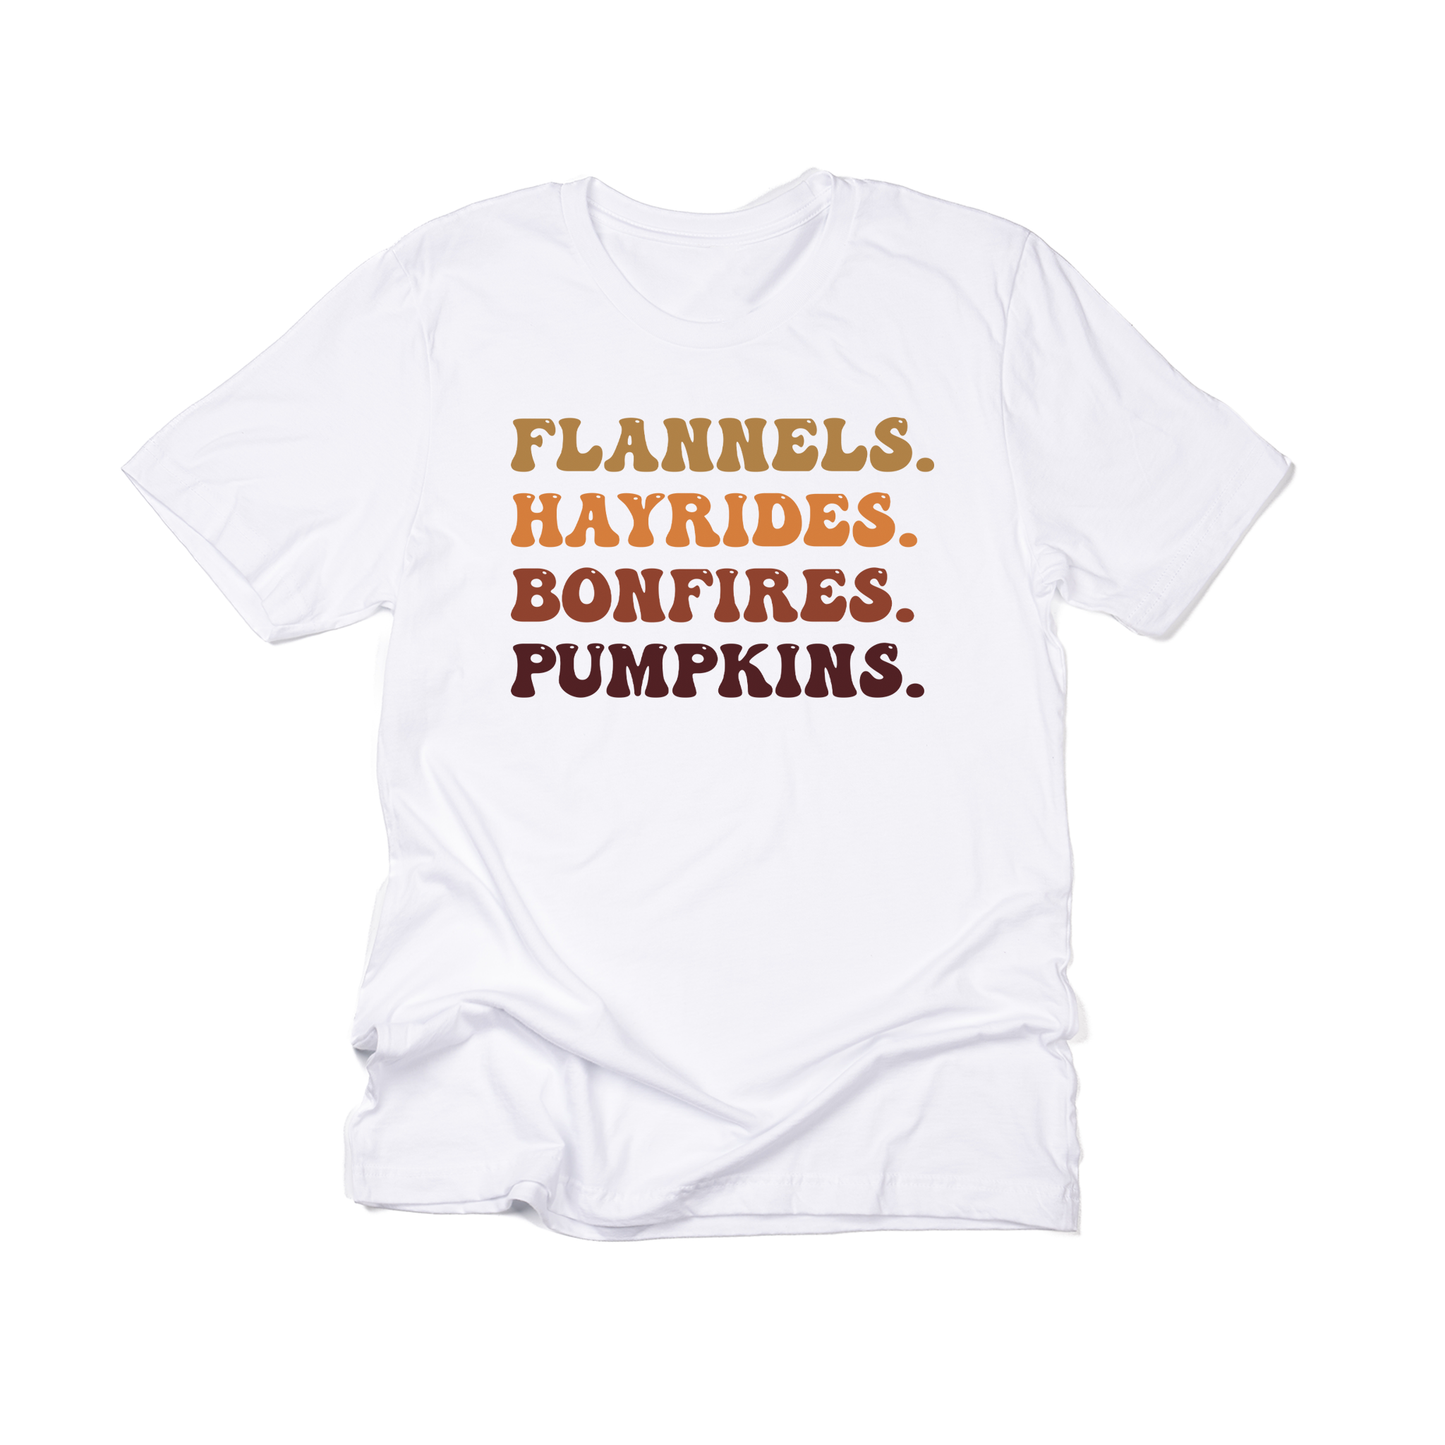 Flannels, Hayrides, Bonfires, Pumpkins - Tee (White)